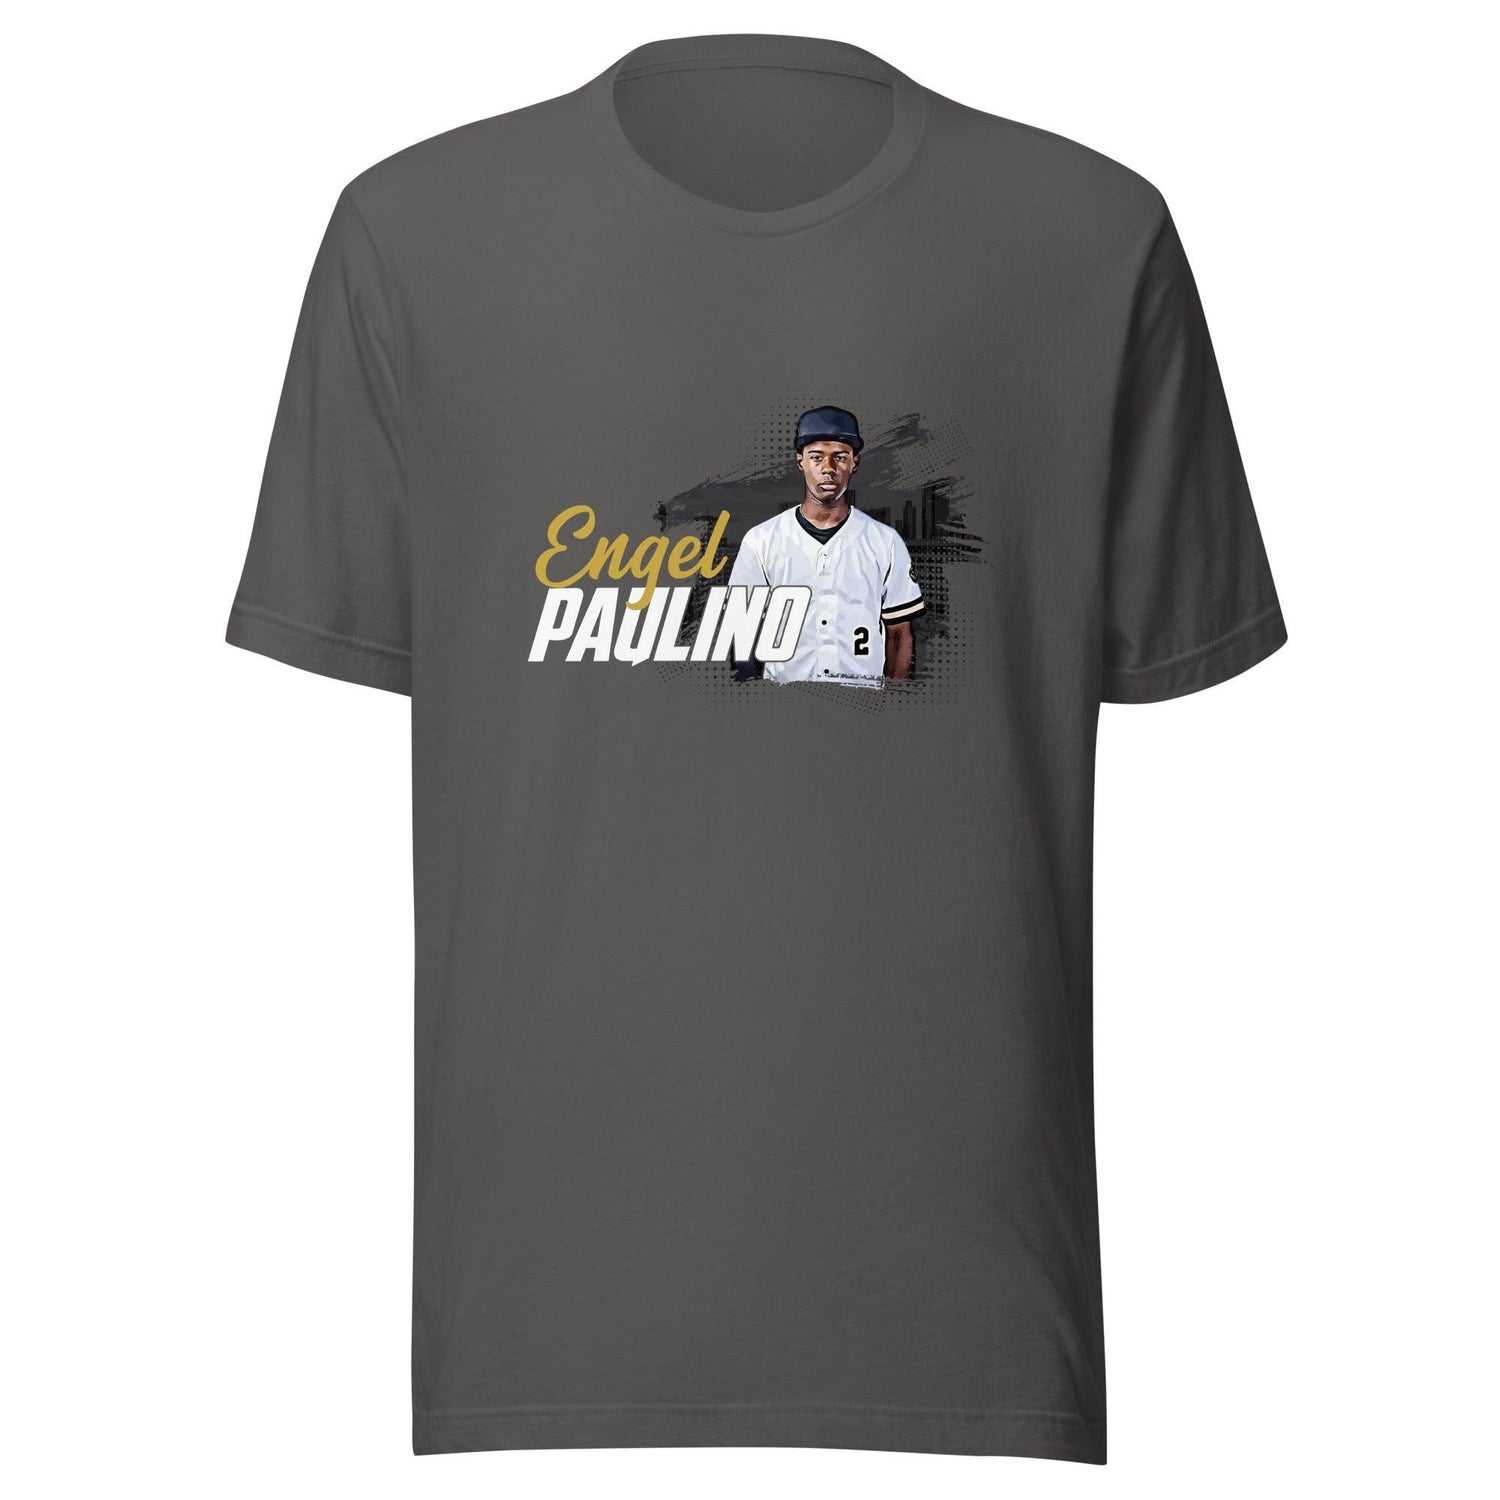 Engel Paulino "Gameday" t-shirt - Fan Arch